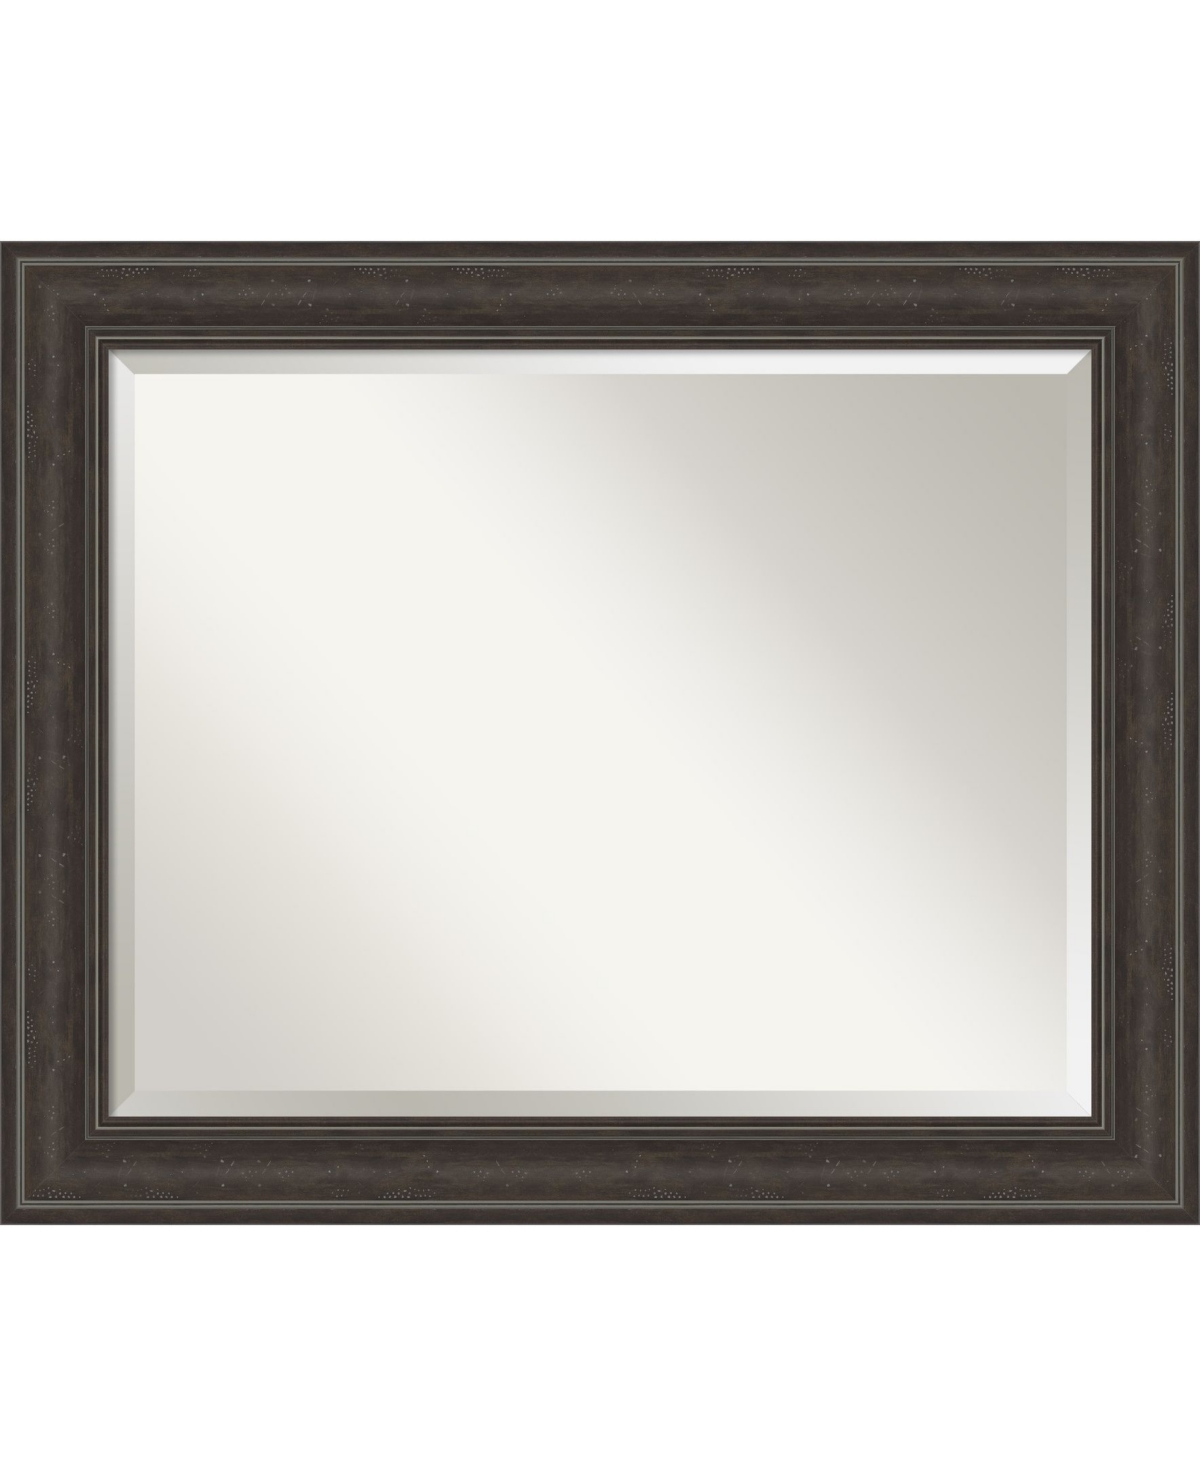 Shipwreck Framed Bathroom Vanity Wall Mirror, 33.38" x 27.38" - Dark Brown